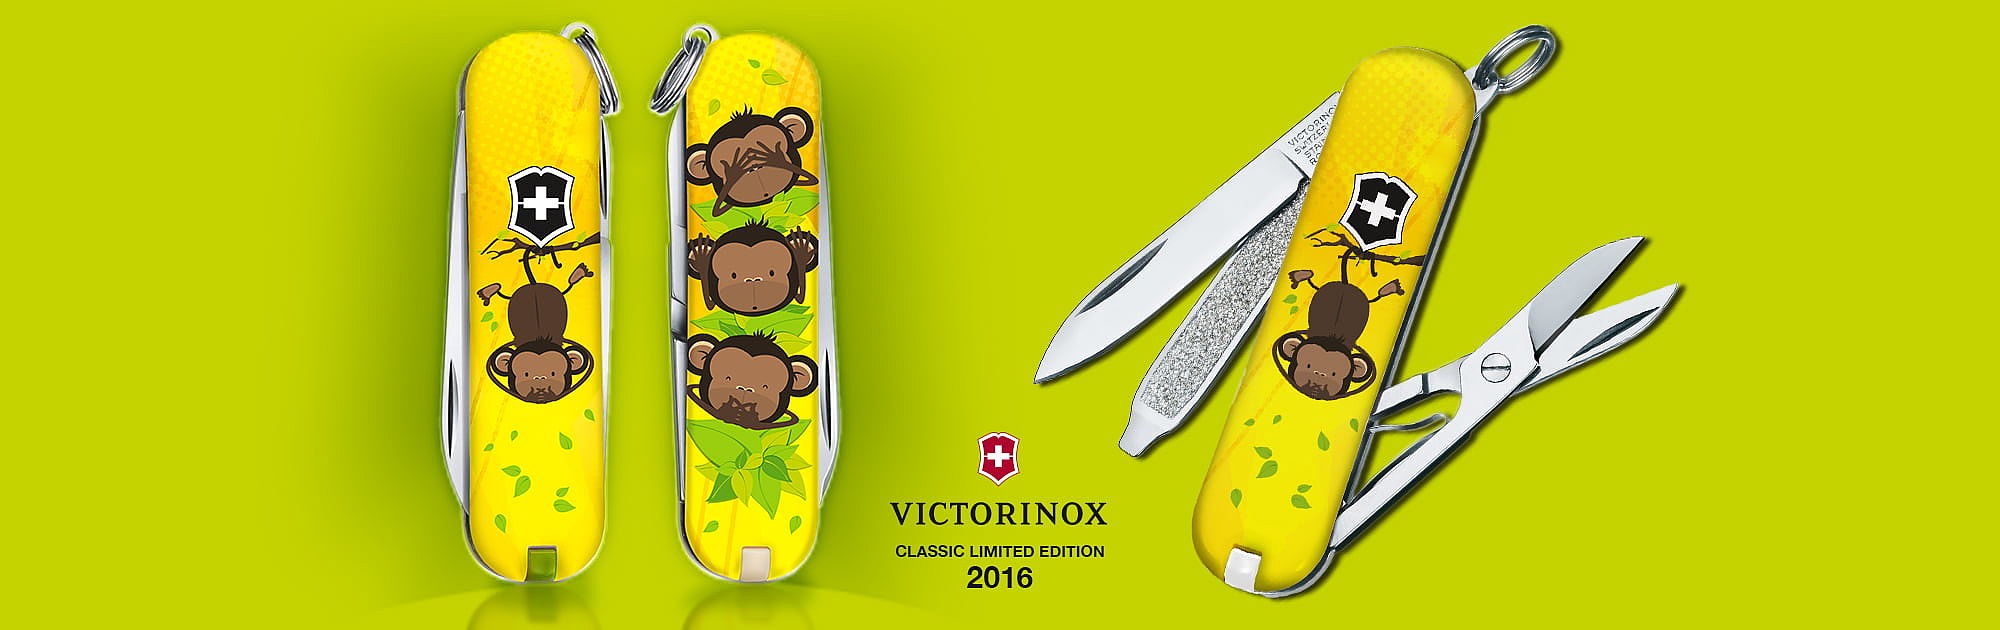 Victorinox 2016